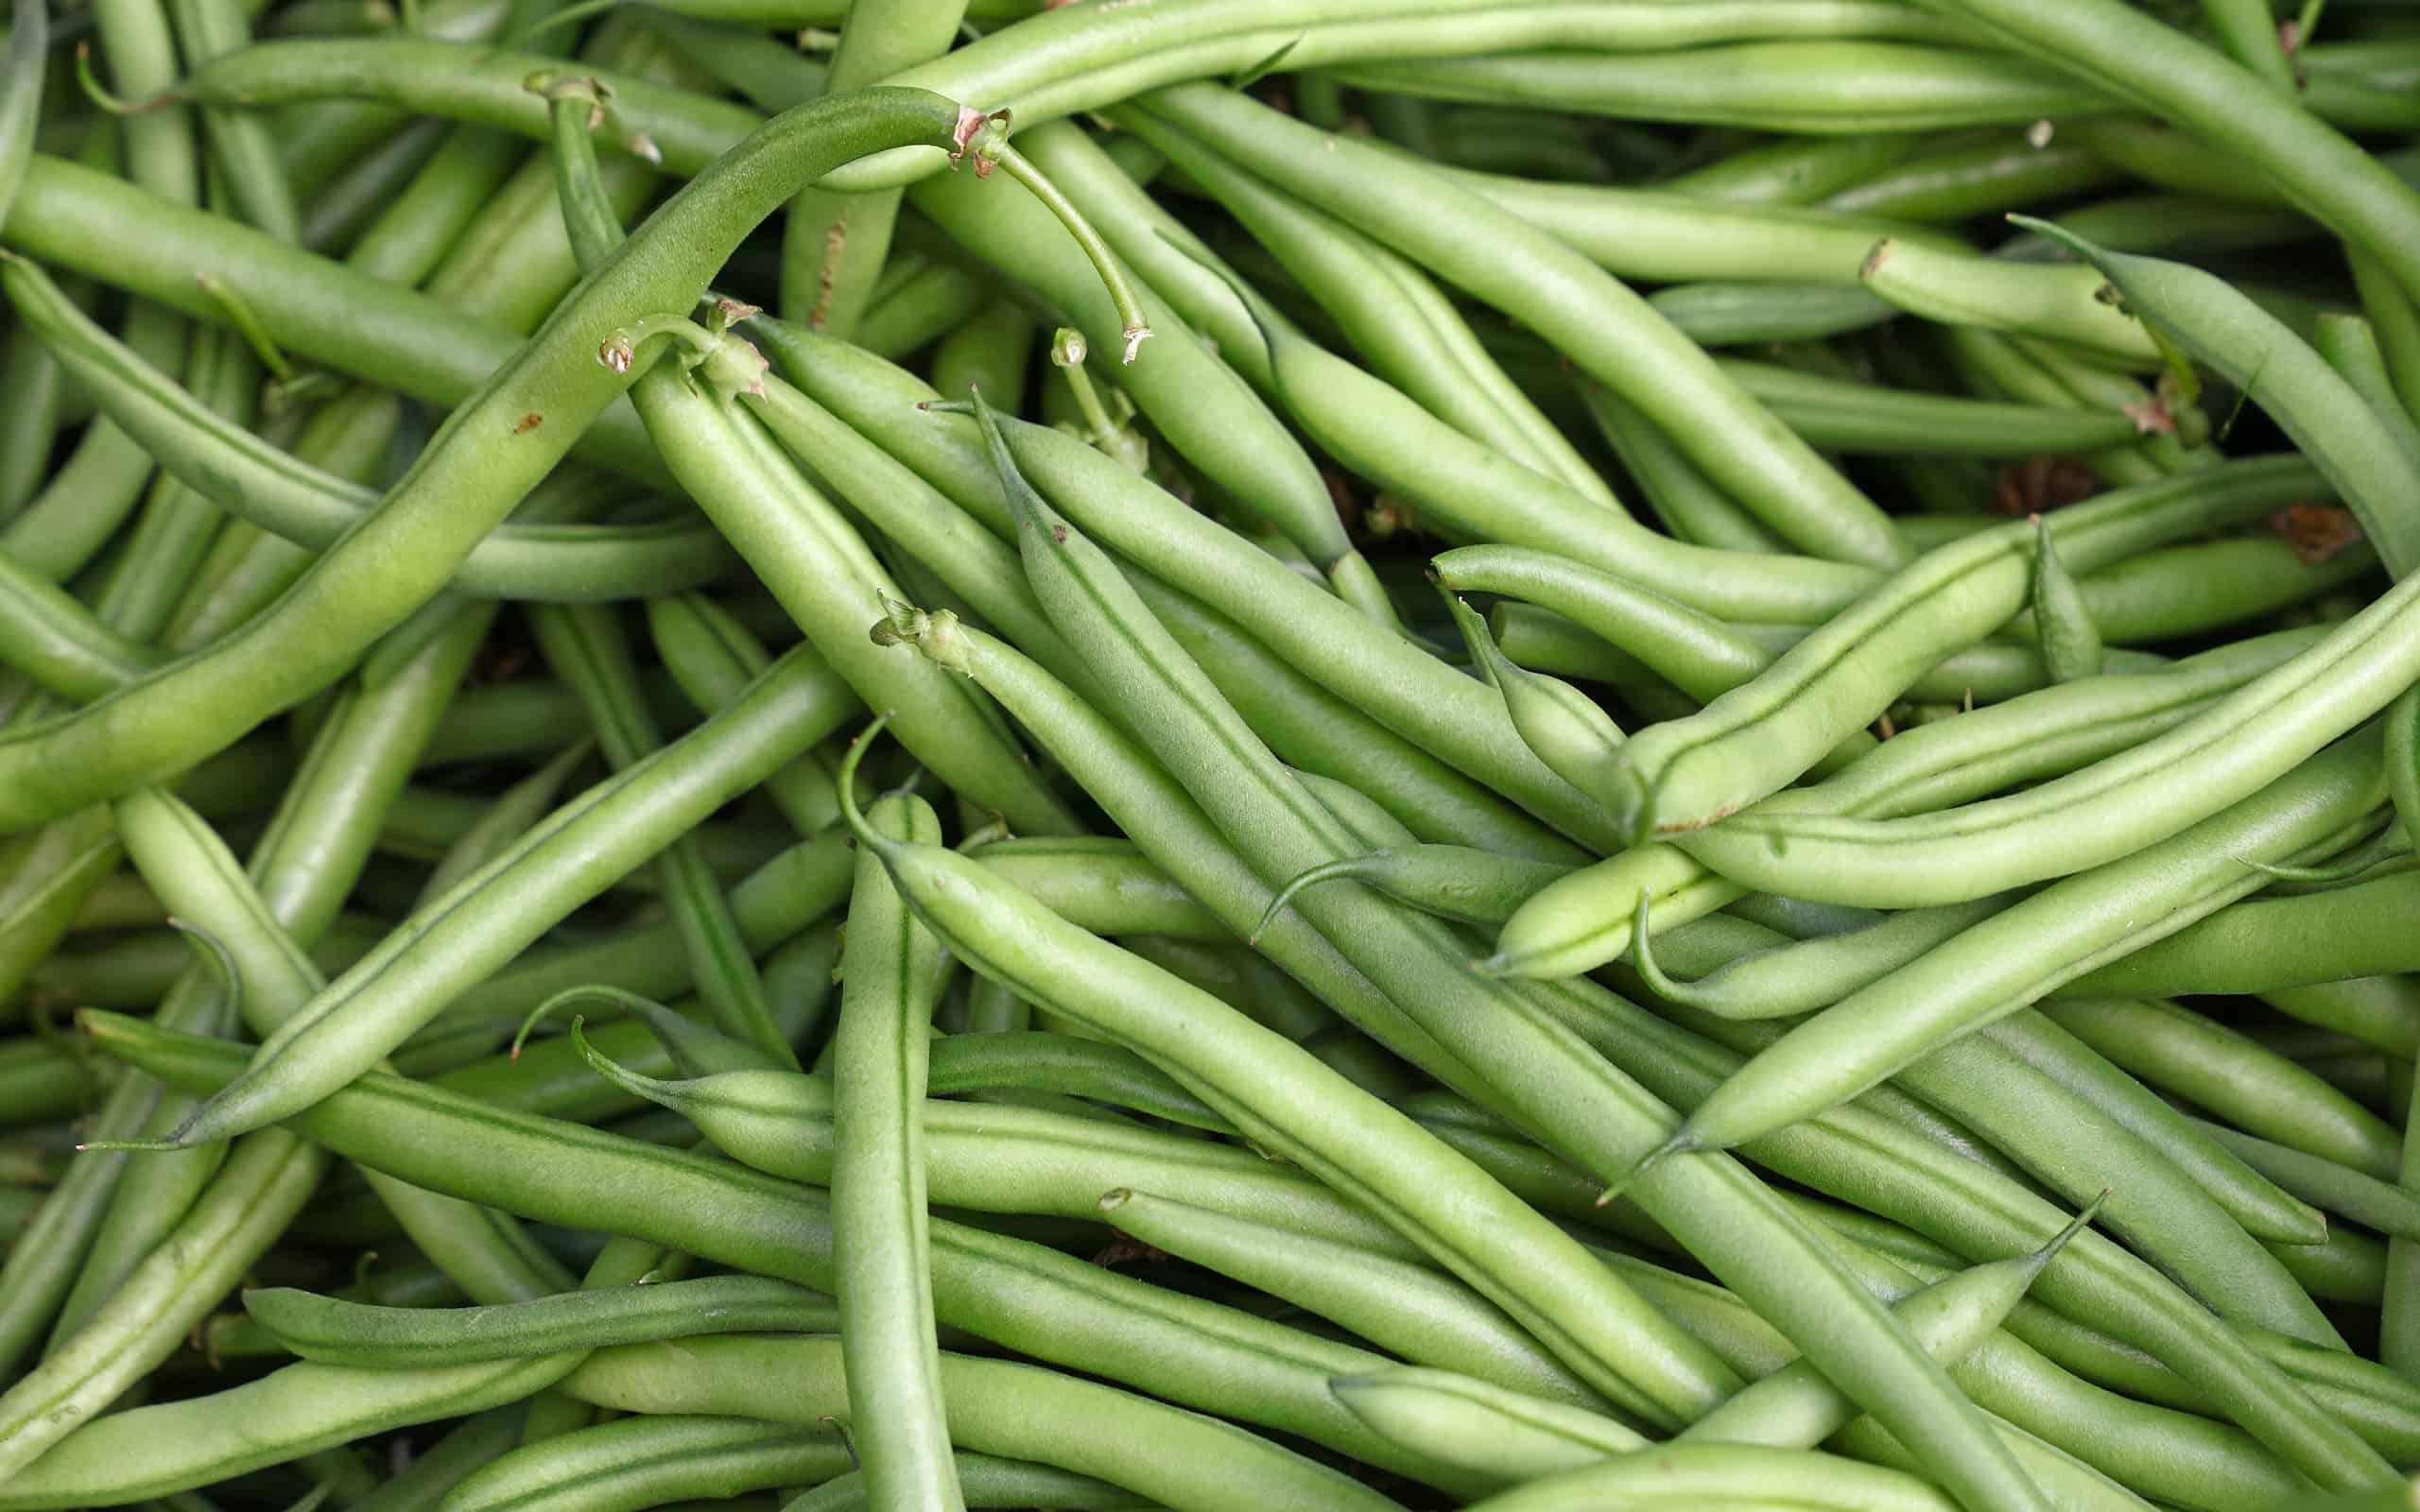 Heap of fresh green beans on market stall